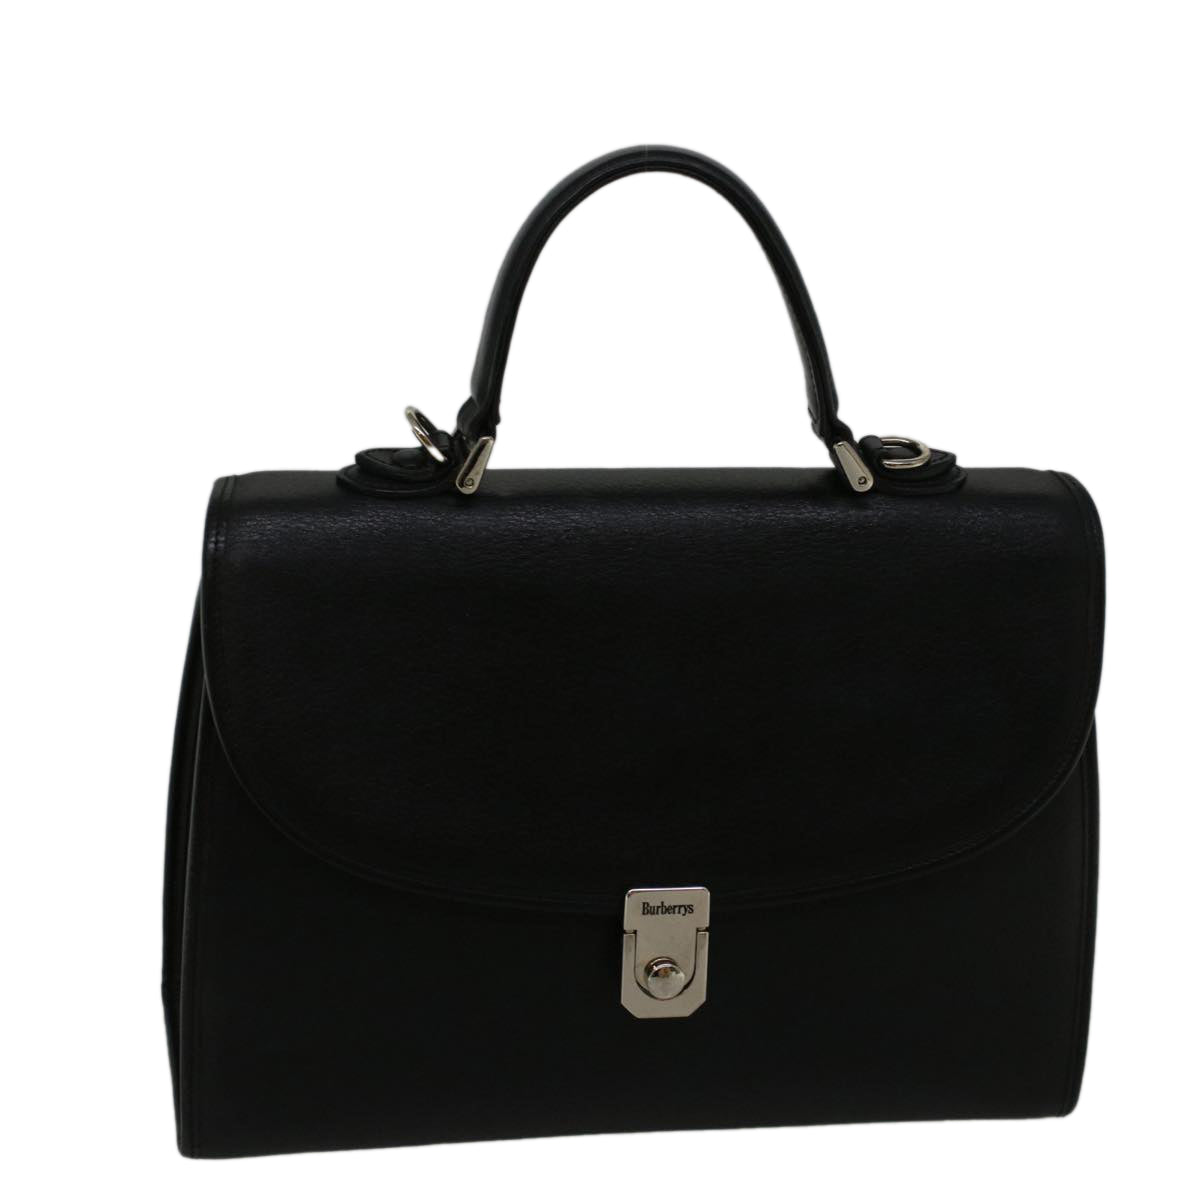 Burberrys Hand Bag Leather Black Auth am5156